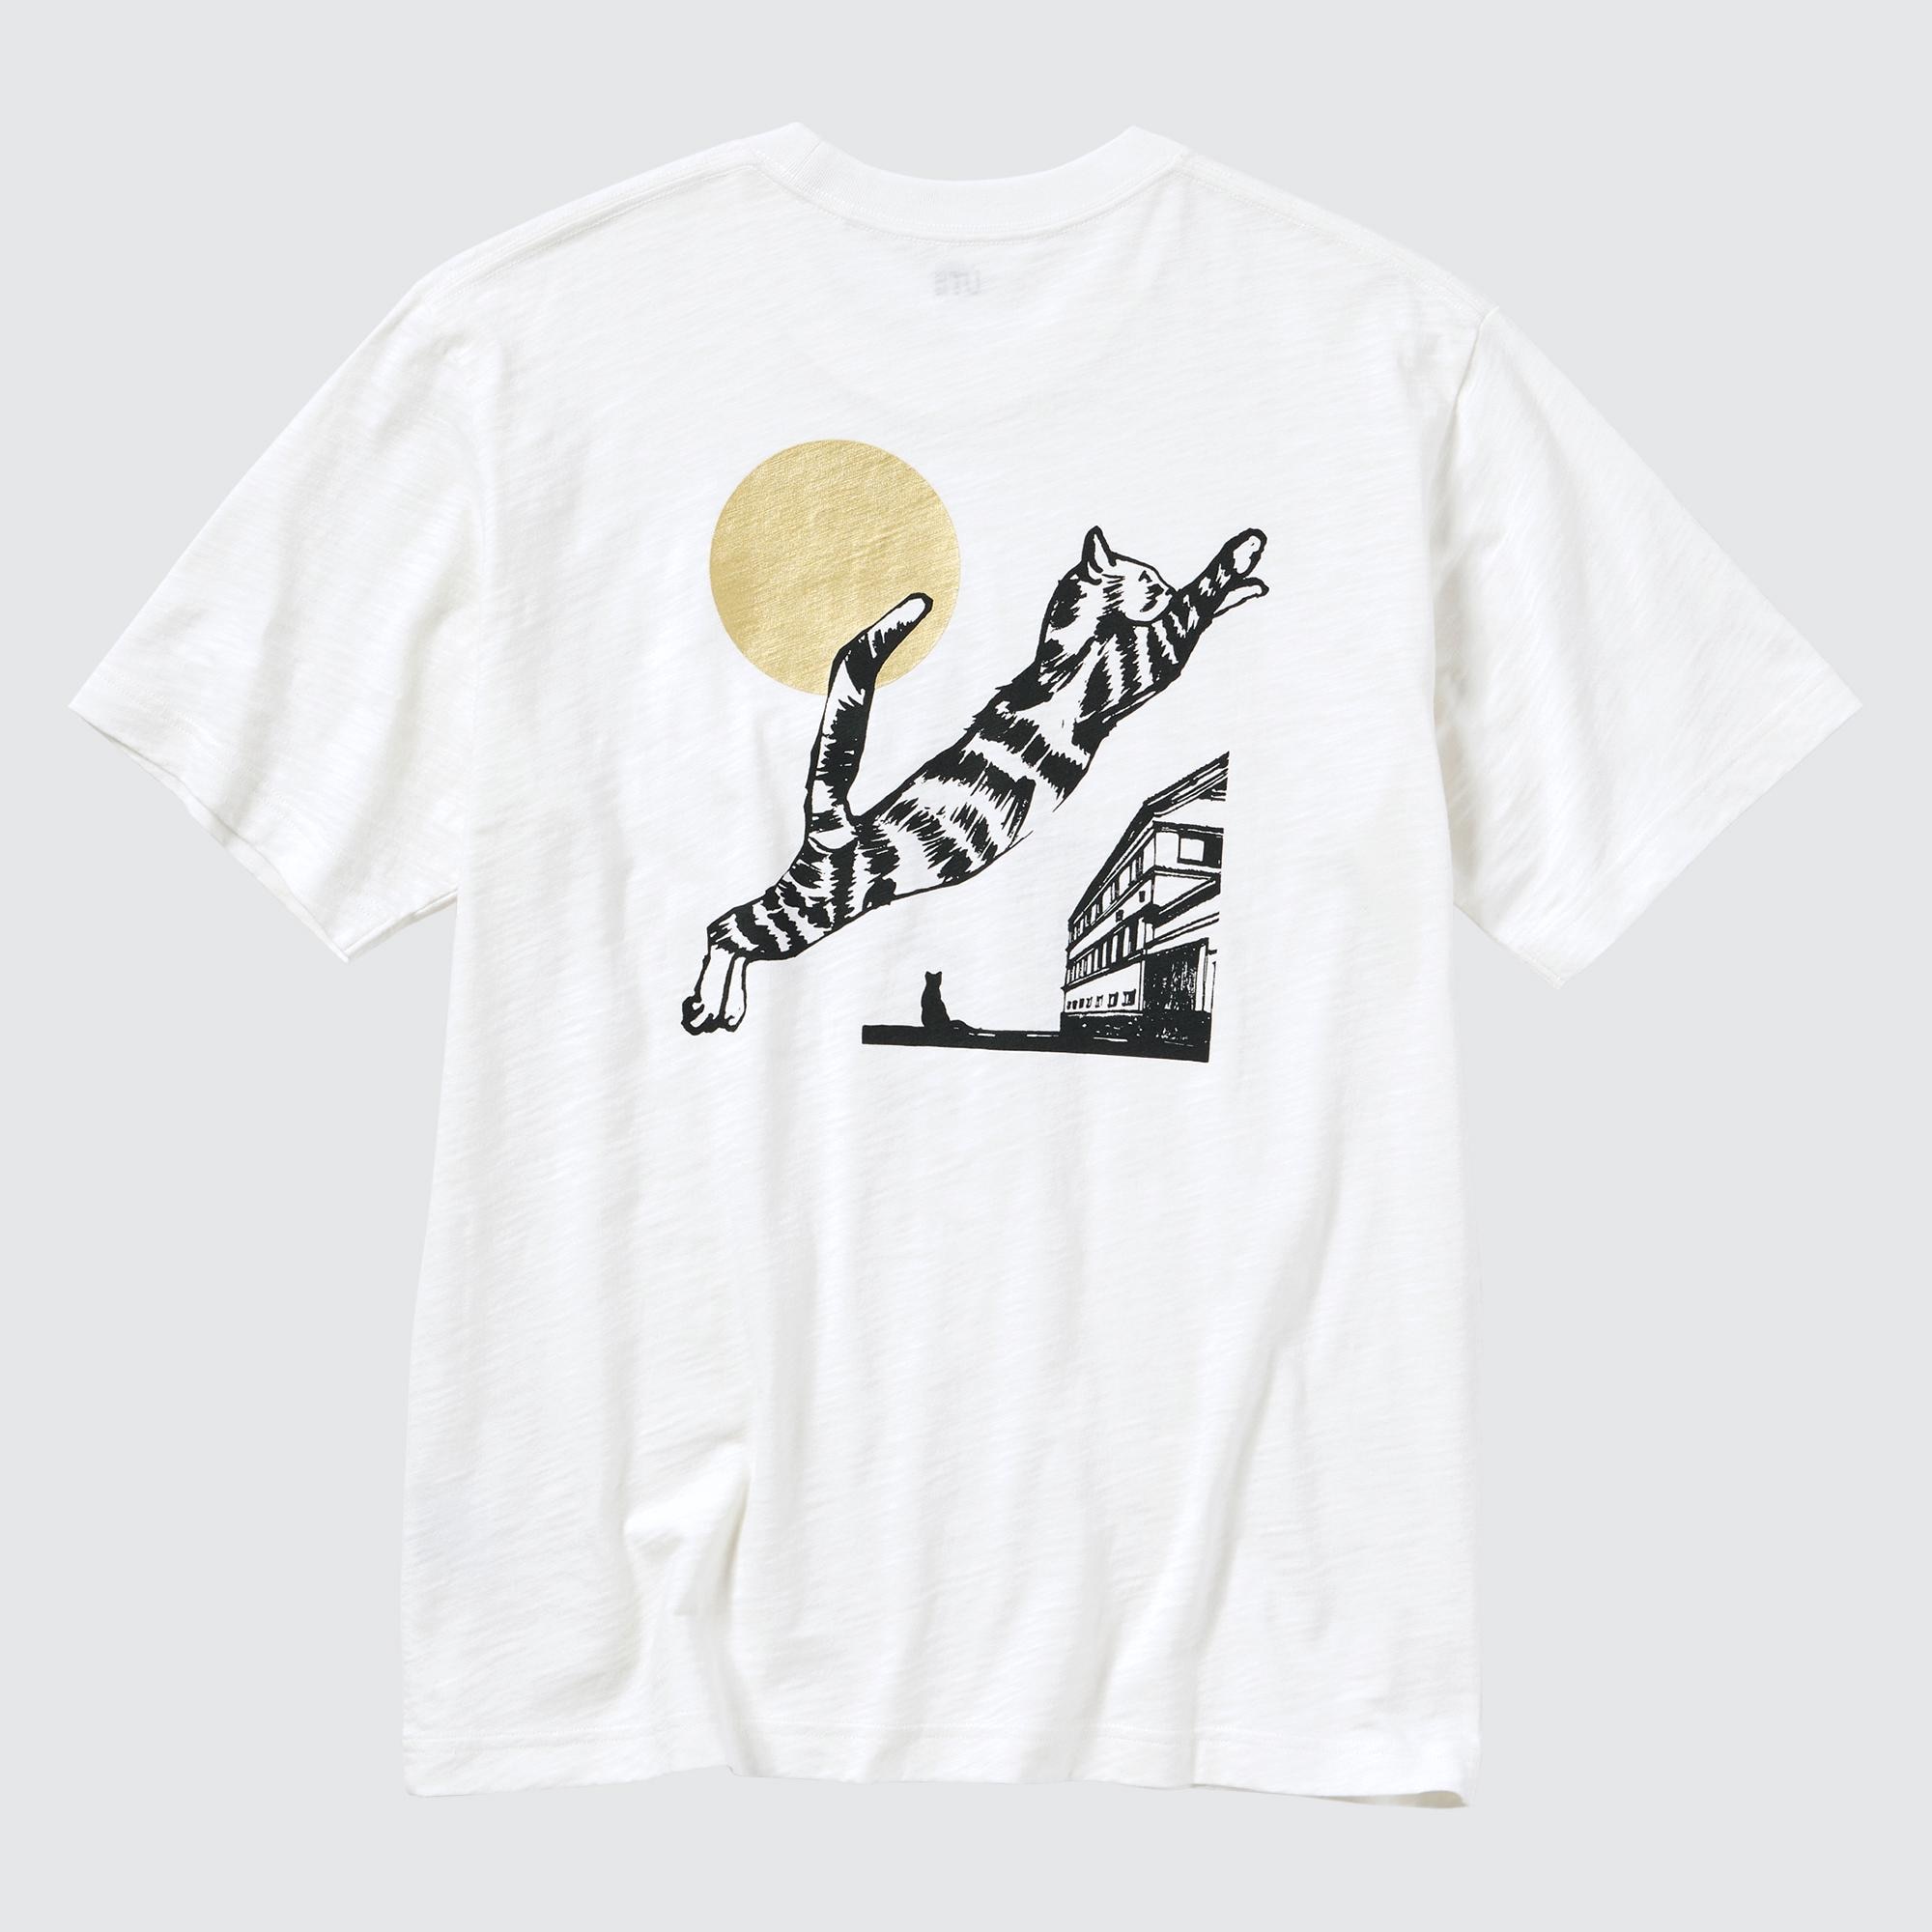 The SAKE Collection UT (Short-Sleeve Graphic T-Shirt)